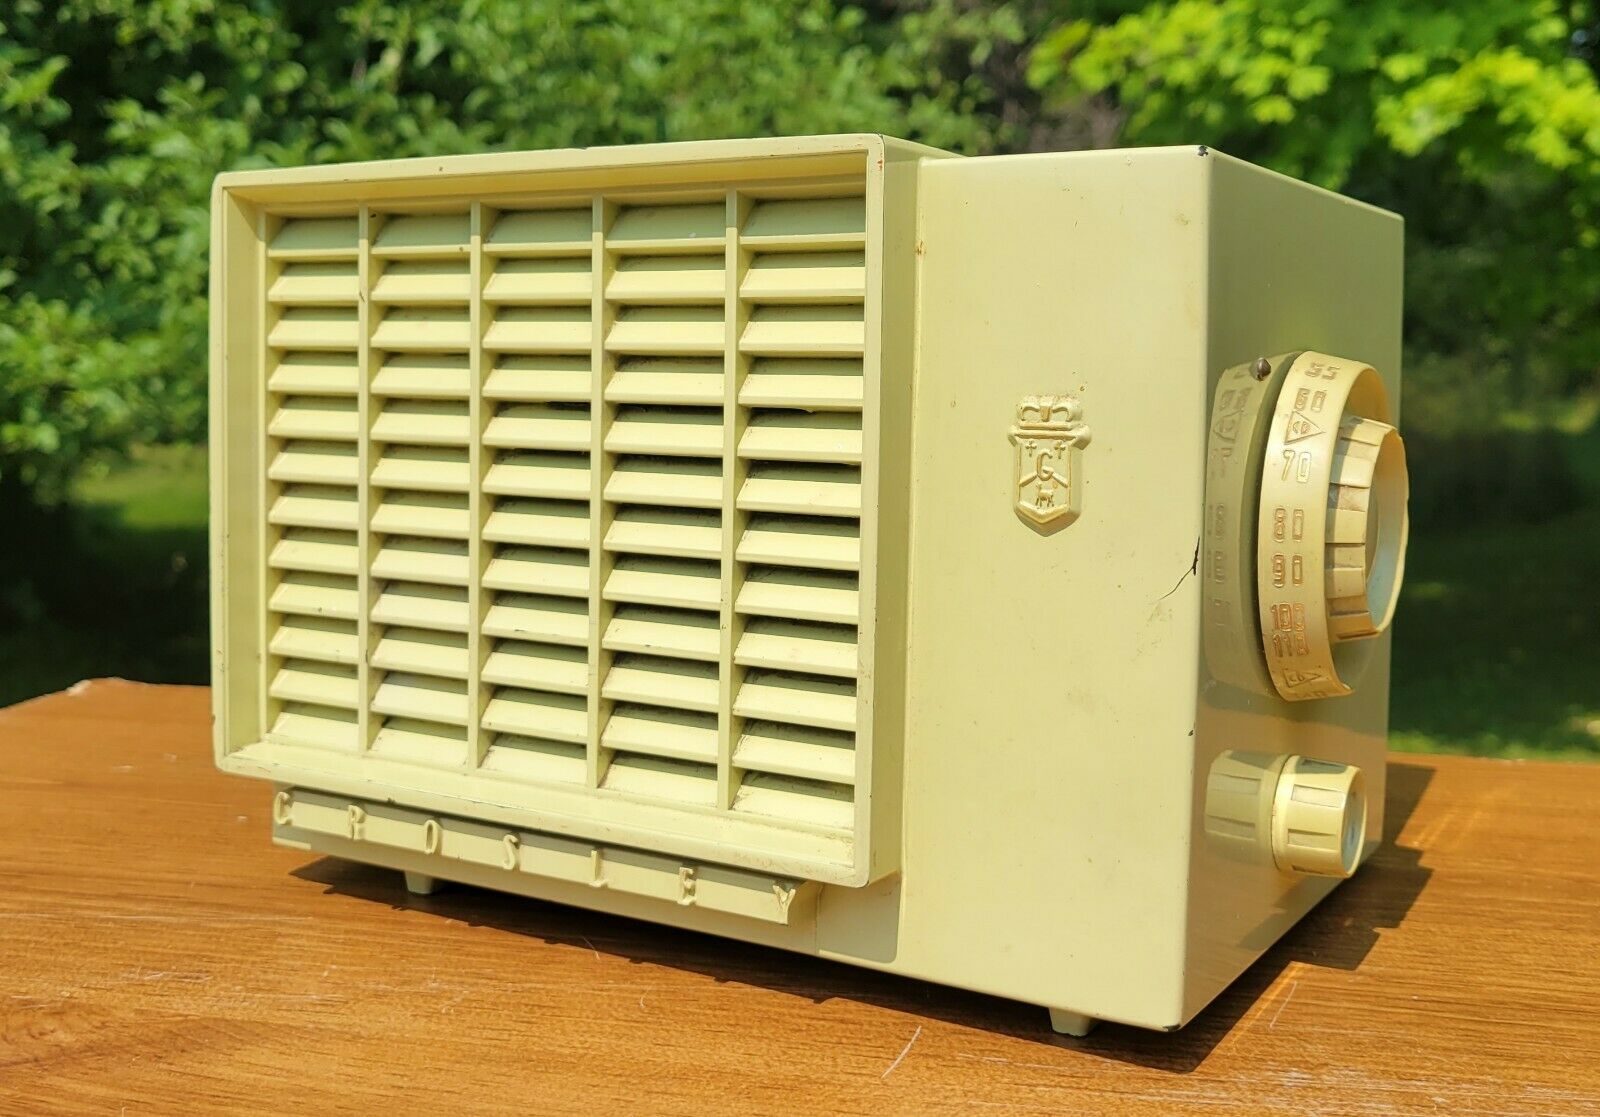 1954 Crosley Am Radio Model F5-ce